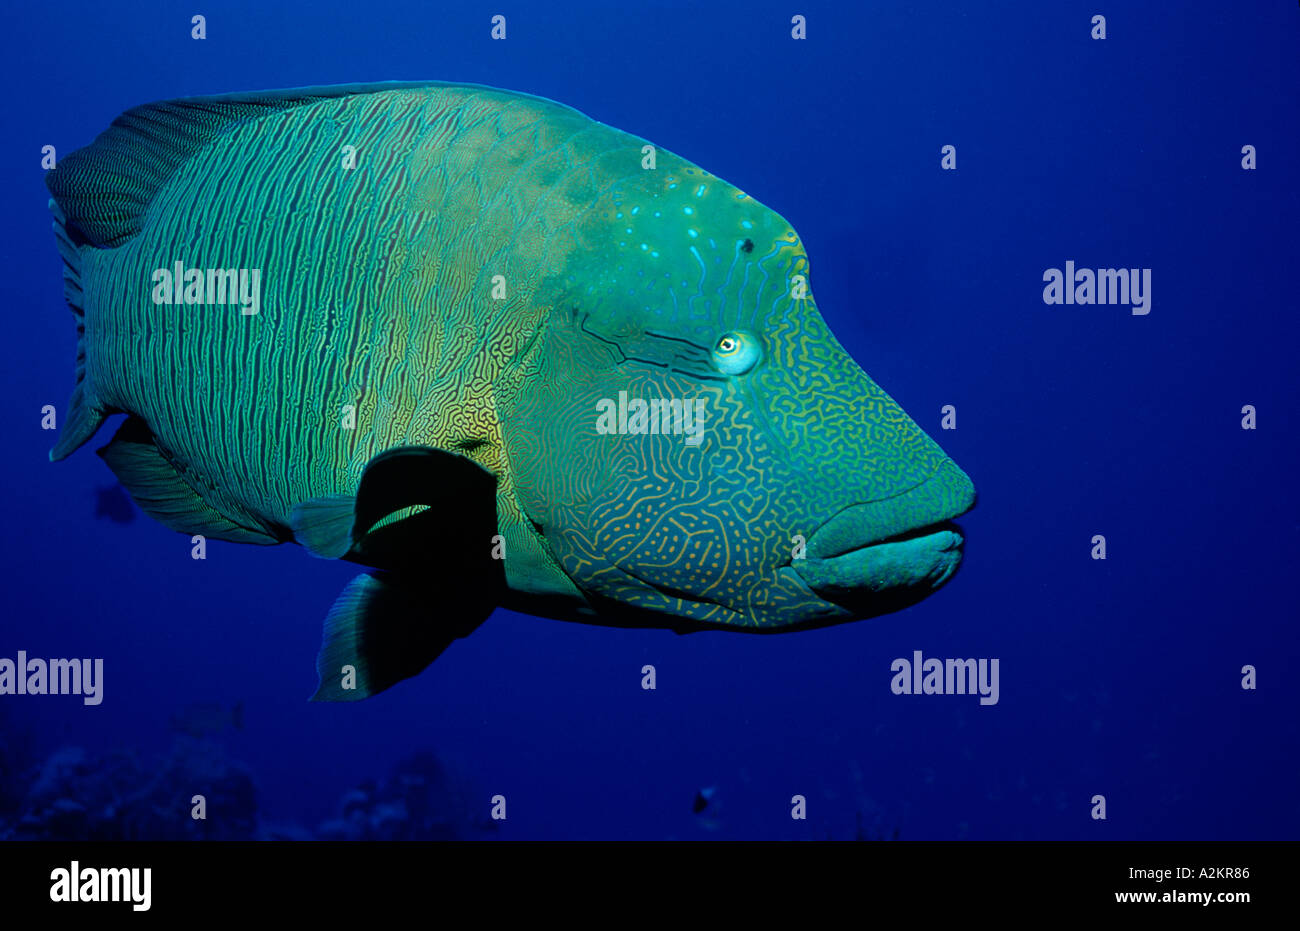 Napoleonfish, Humpback wrasse in the blue water, Cheilinus undulatus Stock Photo